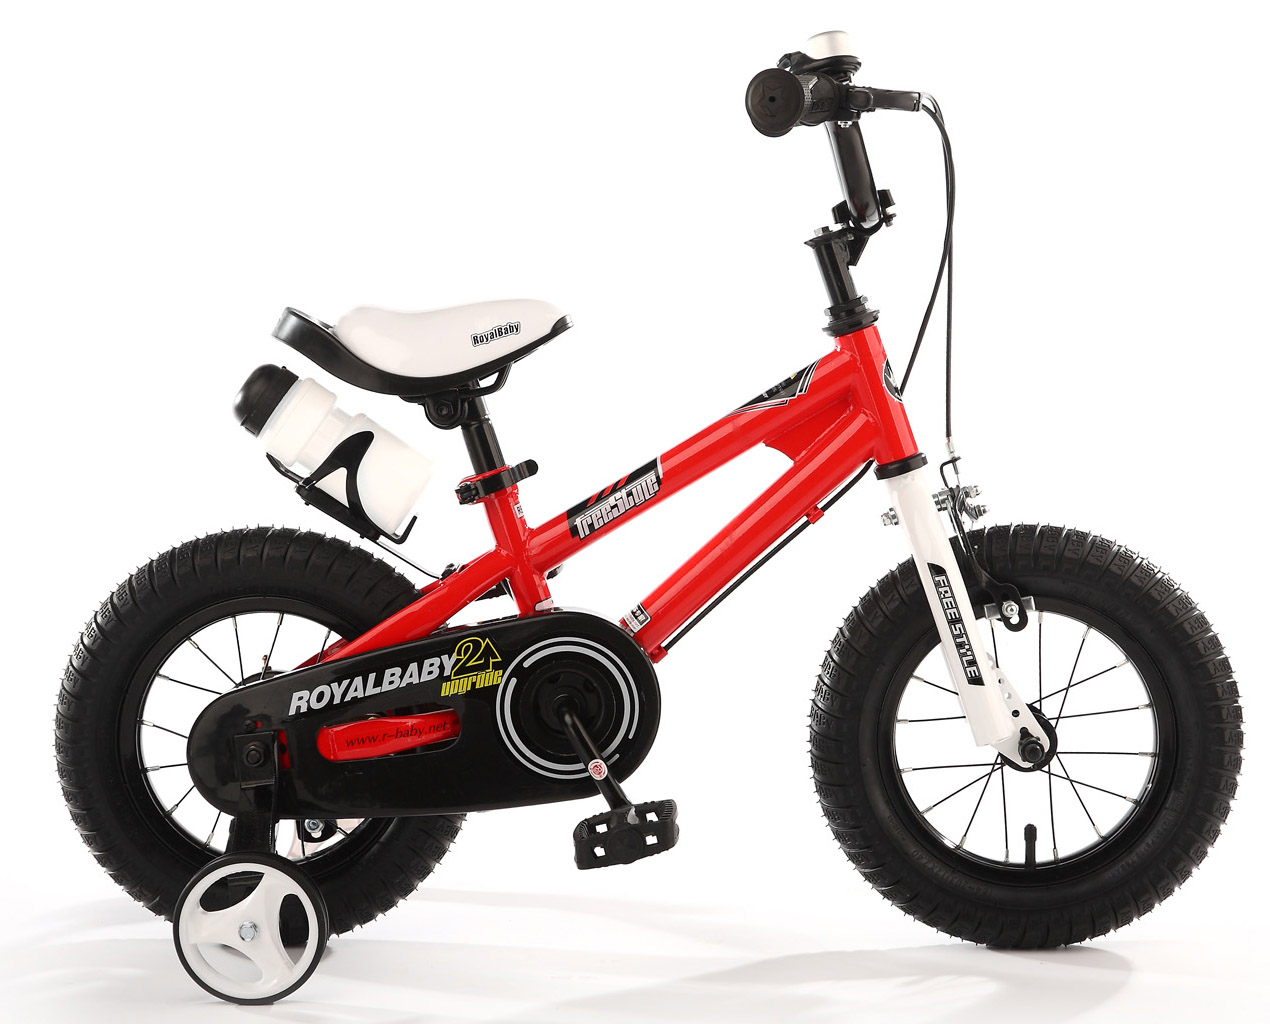  Отзывы о Детском велосипеде Royal Baby Freestyle Steel 18" (2020) 2020